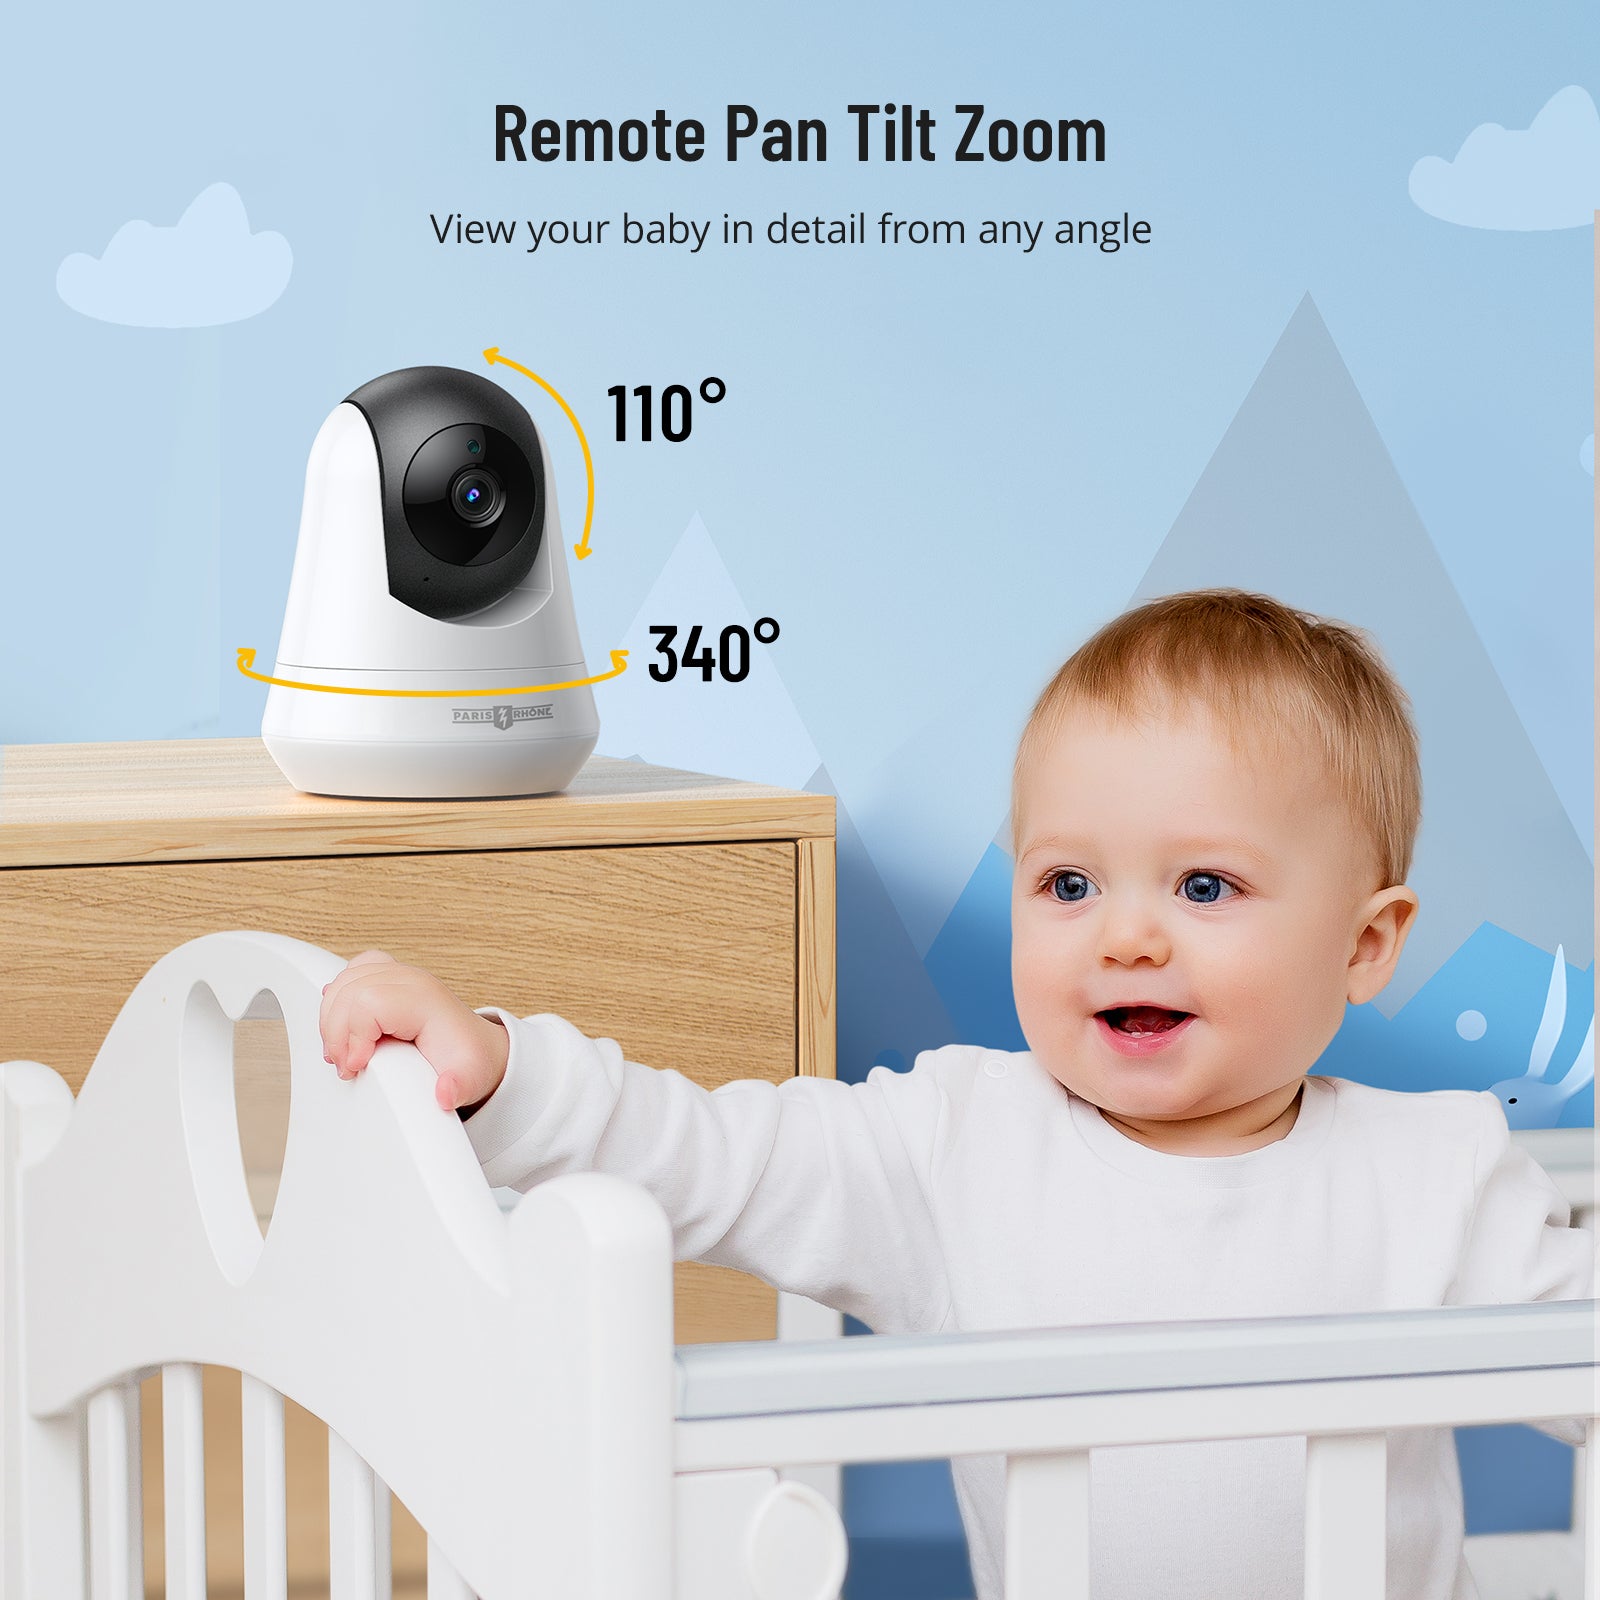 Paris Rhône 720P HD Baby Monitor IH003, Wide-Angle Monitoring,5 inch Display-Baby Monitors-ParisRhone